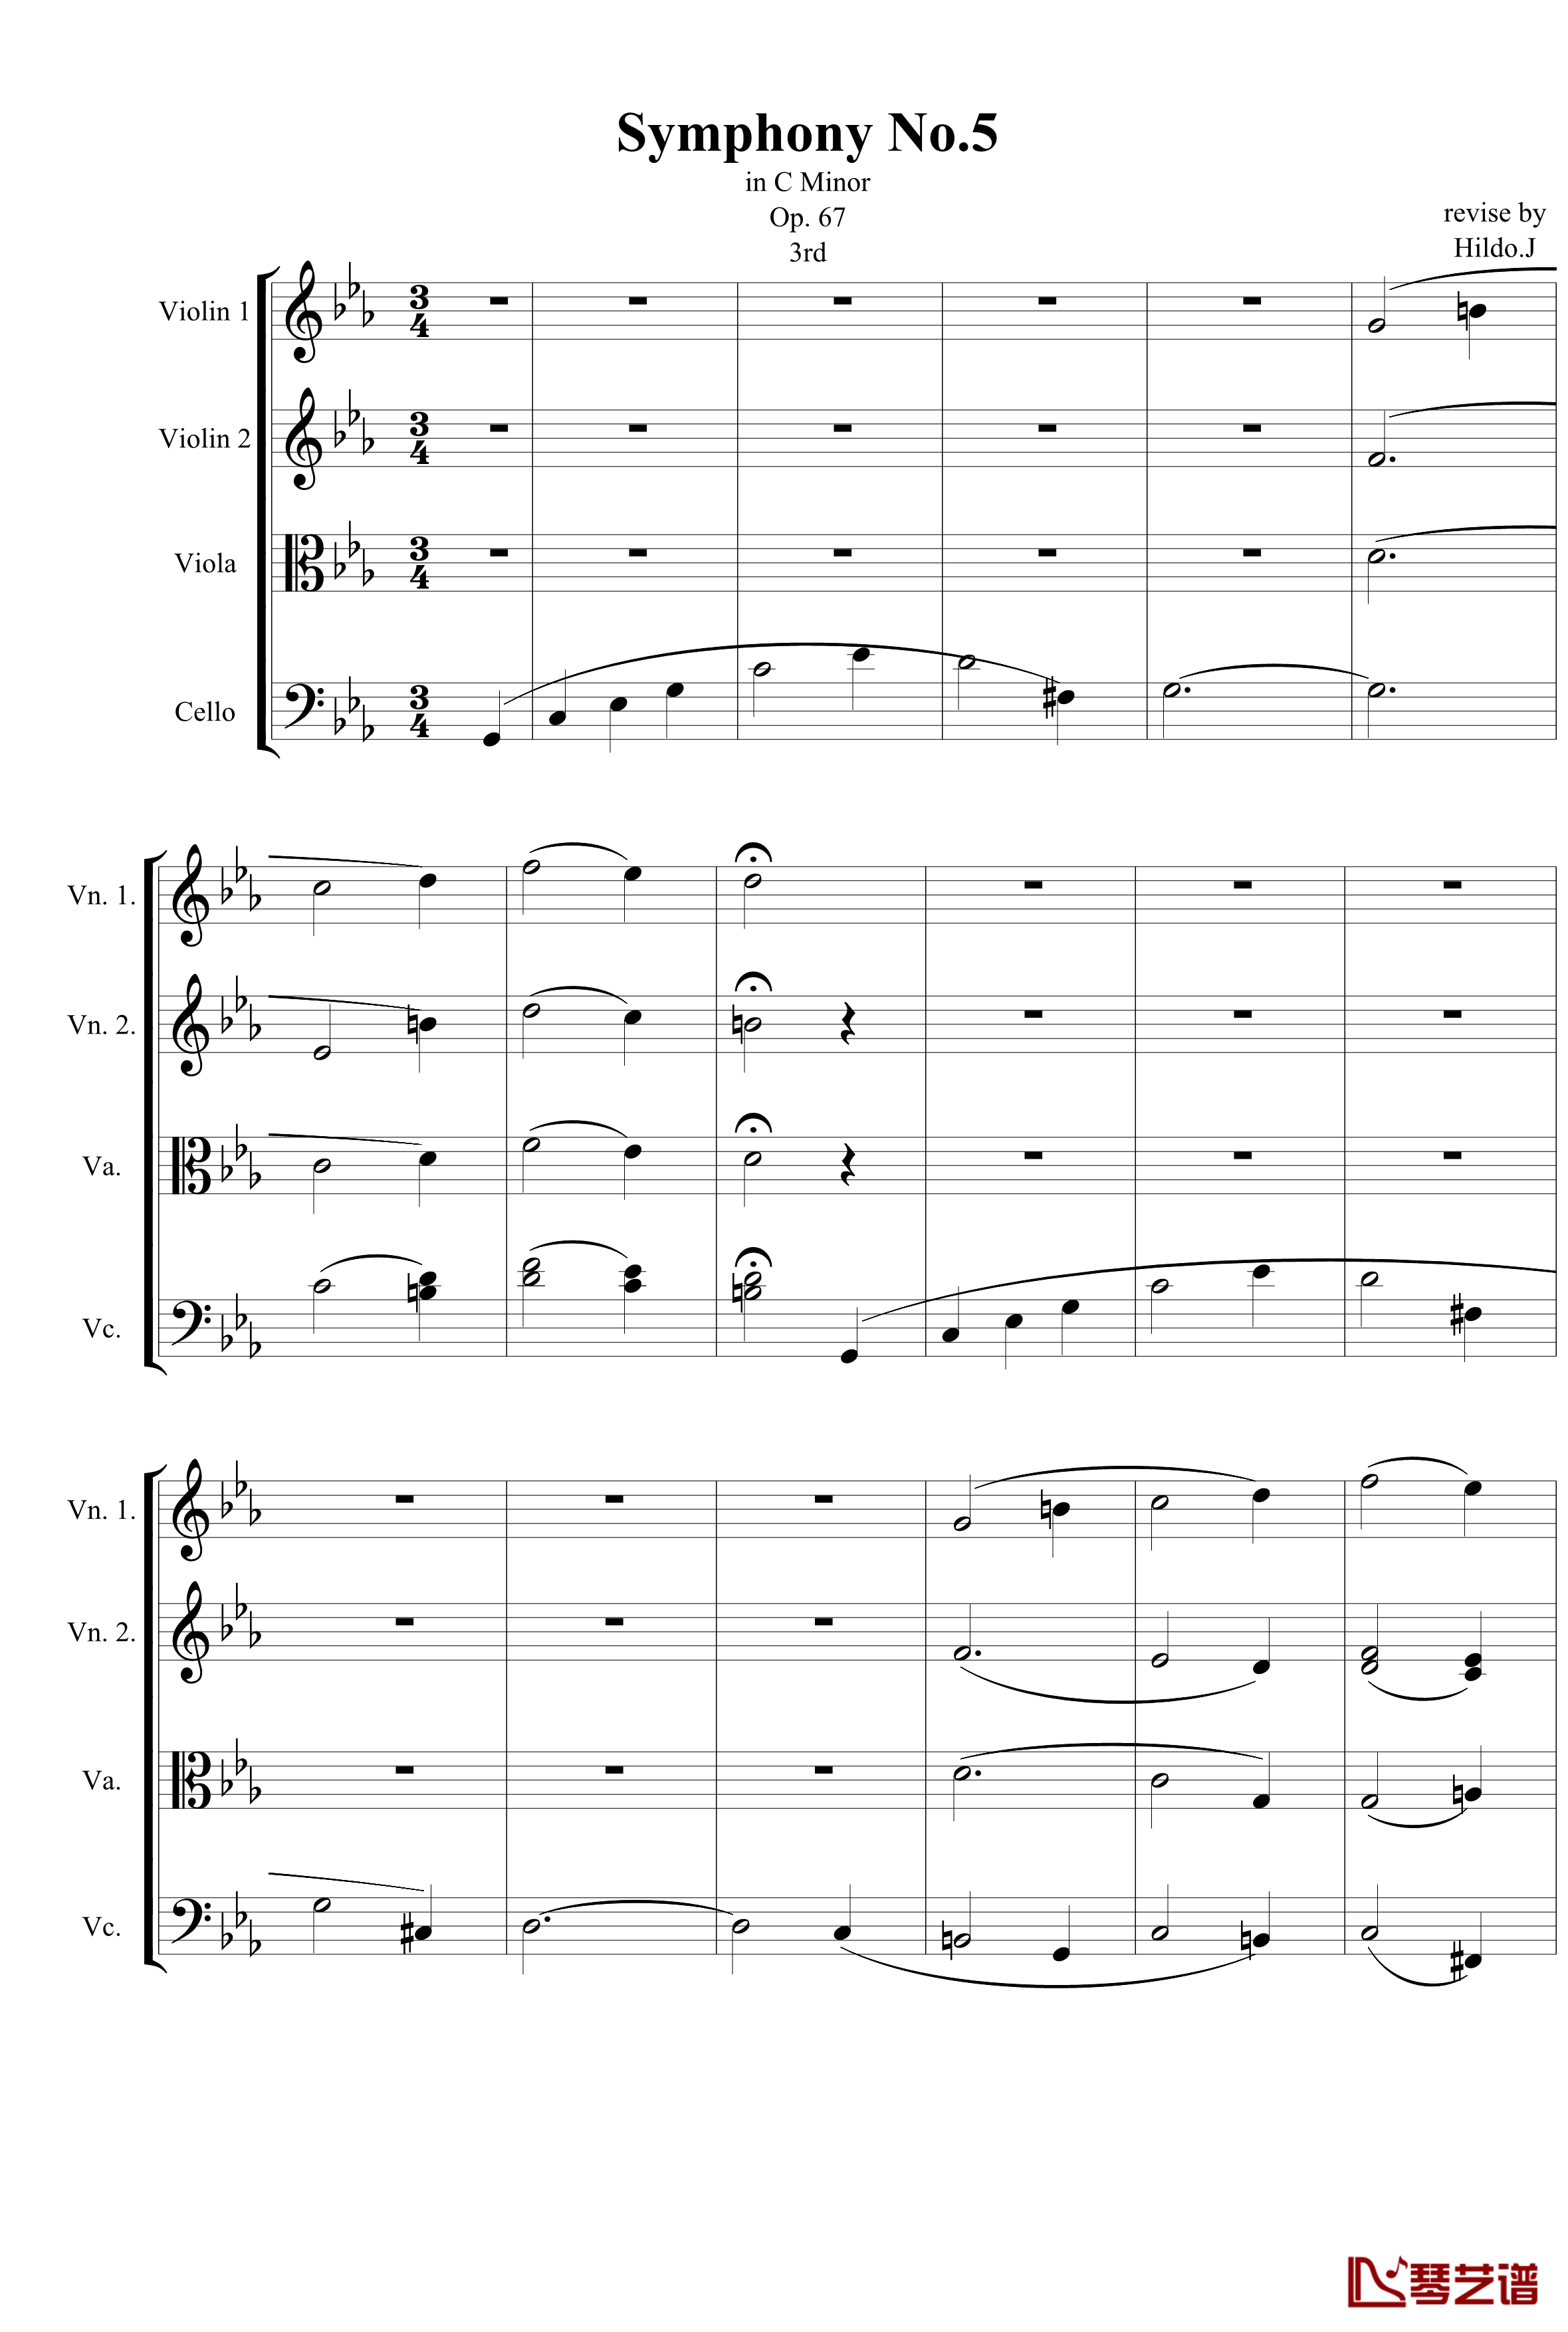 Symphony No.5 in C Minor 3rd钢琴谱-String quartet-贝多芬-beethoven1